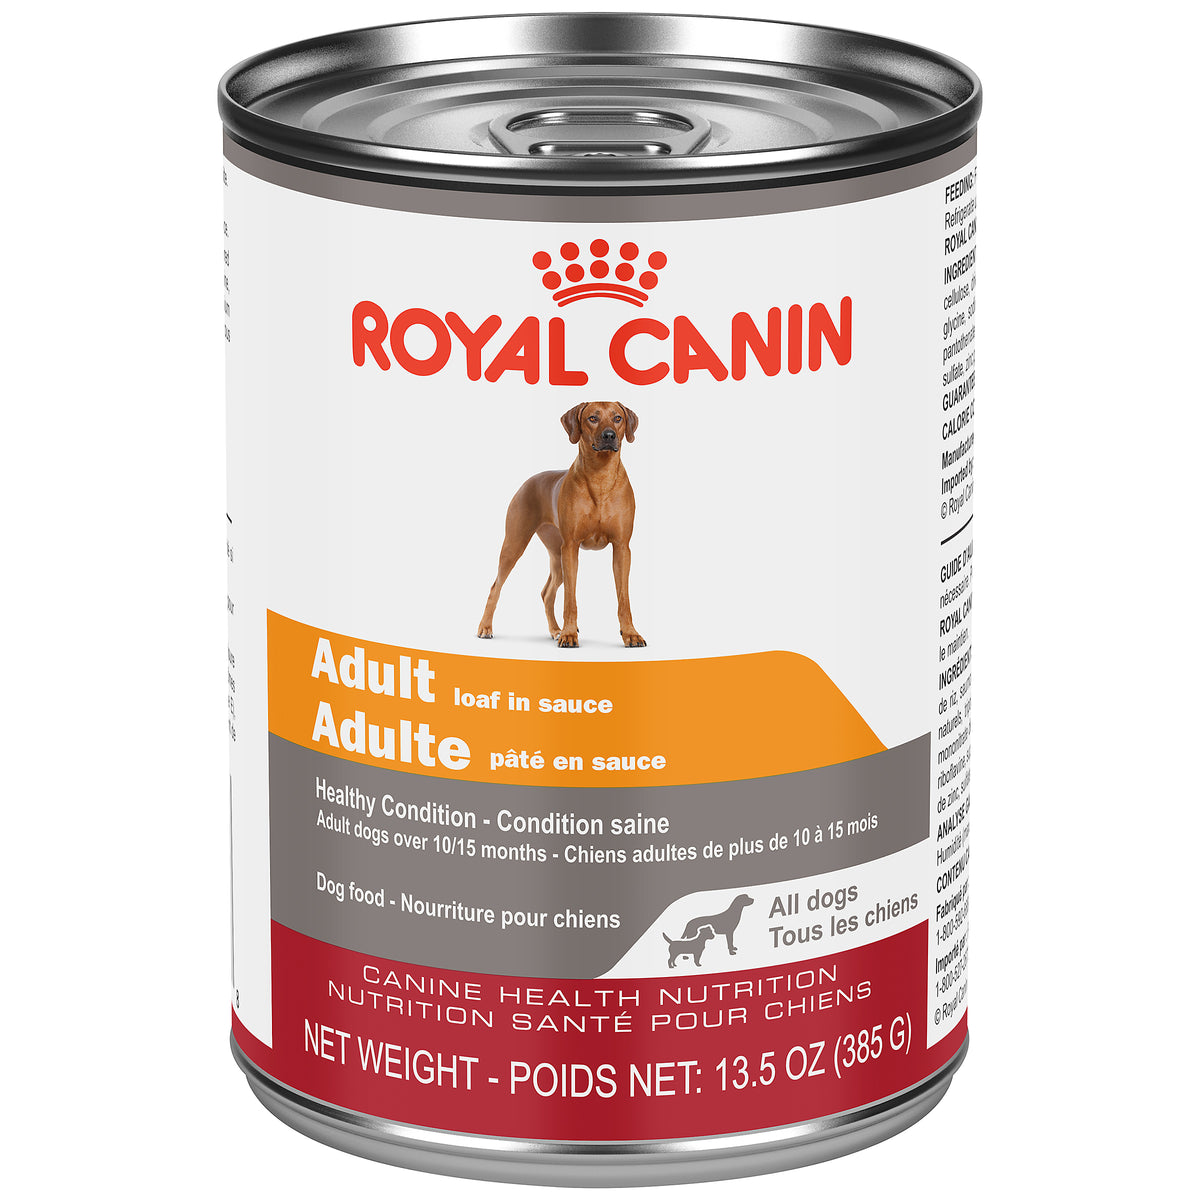 Royal Canin Adult Loaf Canned Dog Food (385g)